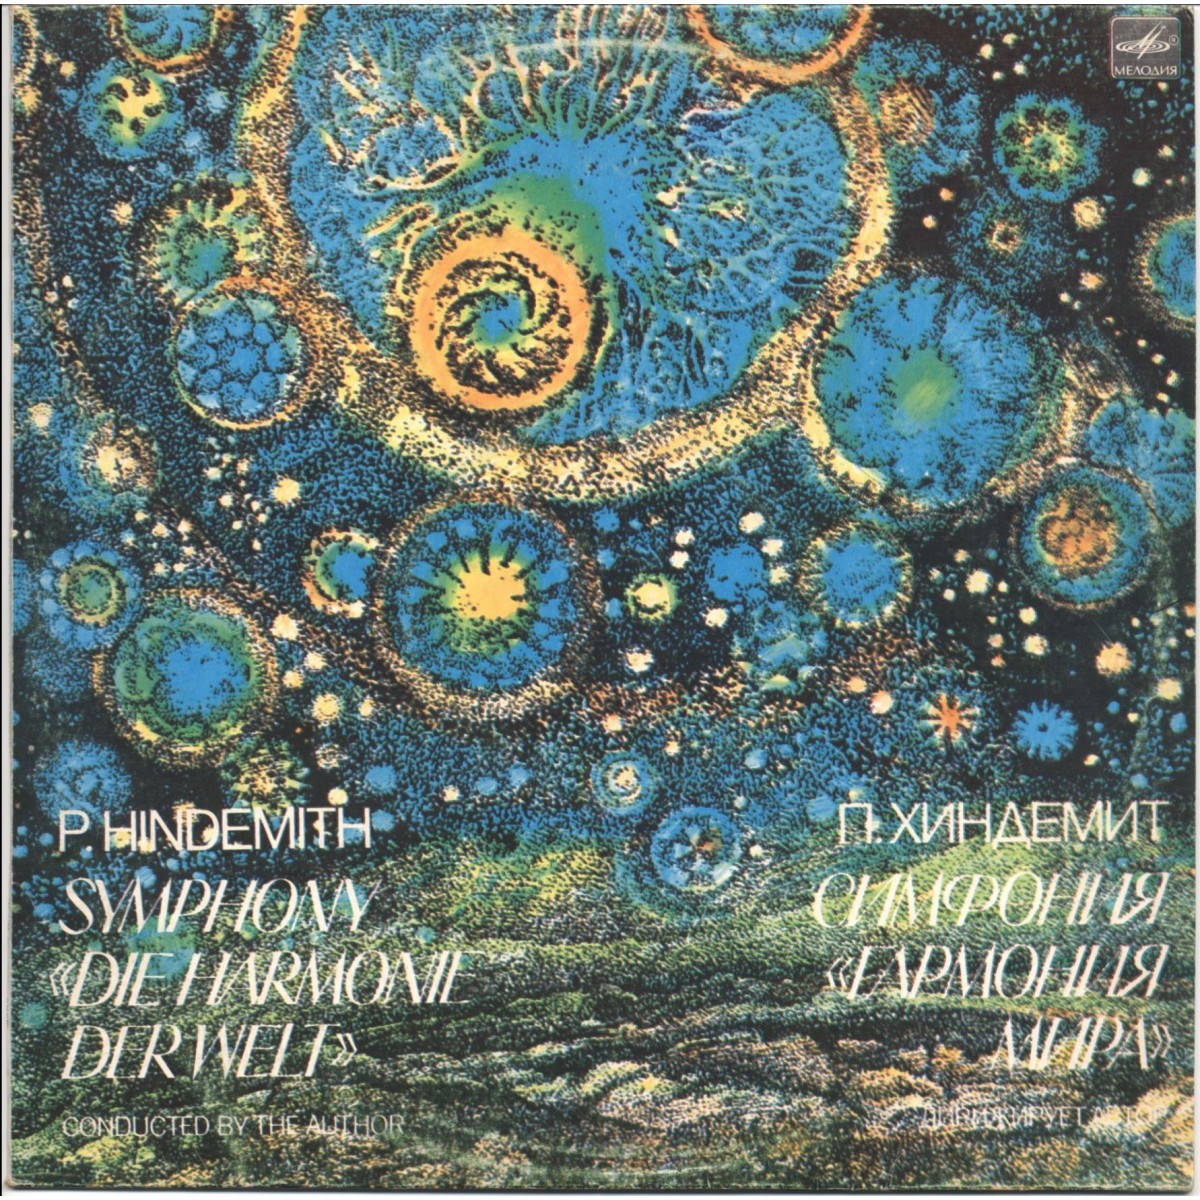 П. ХИНДЕМИТ (1895-1963): Симфония «Гармония мира»